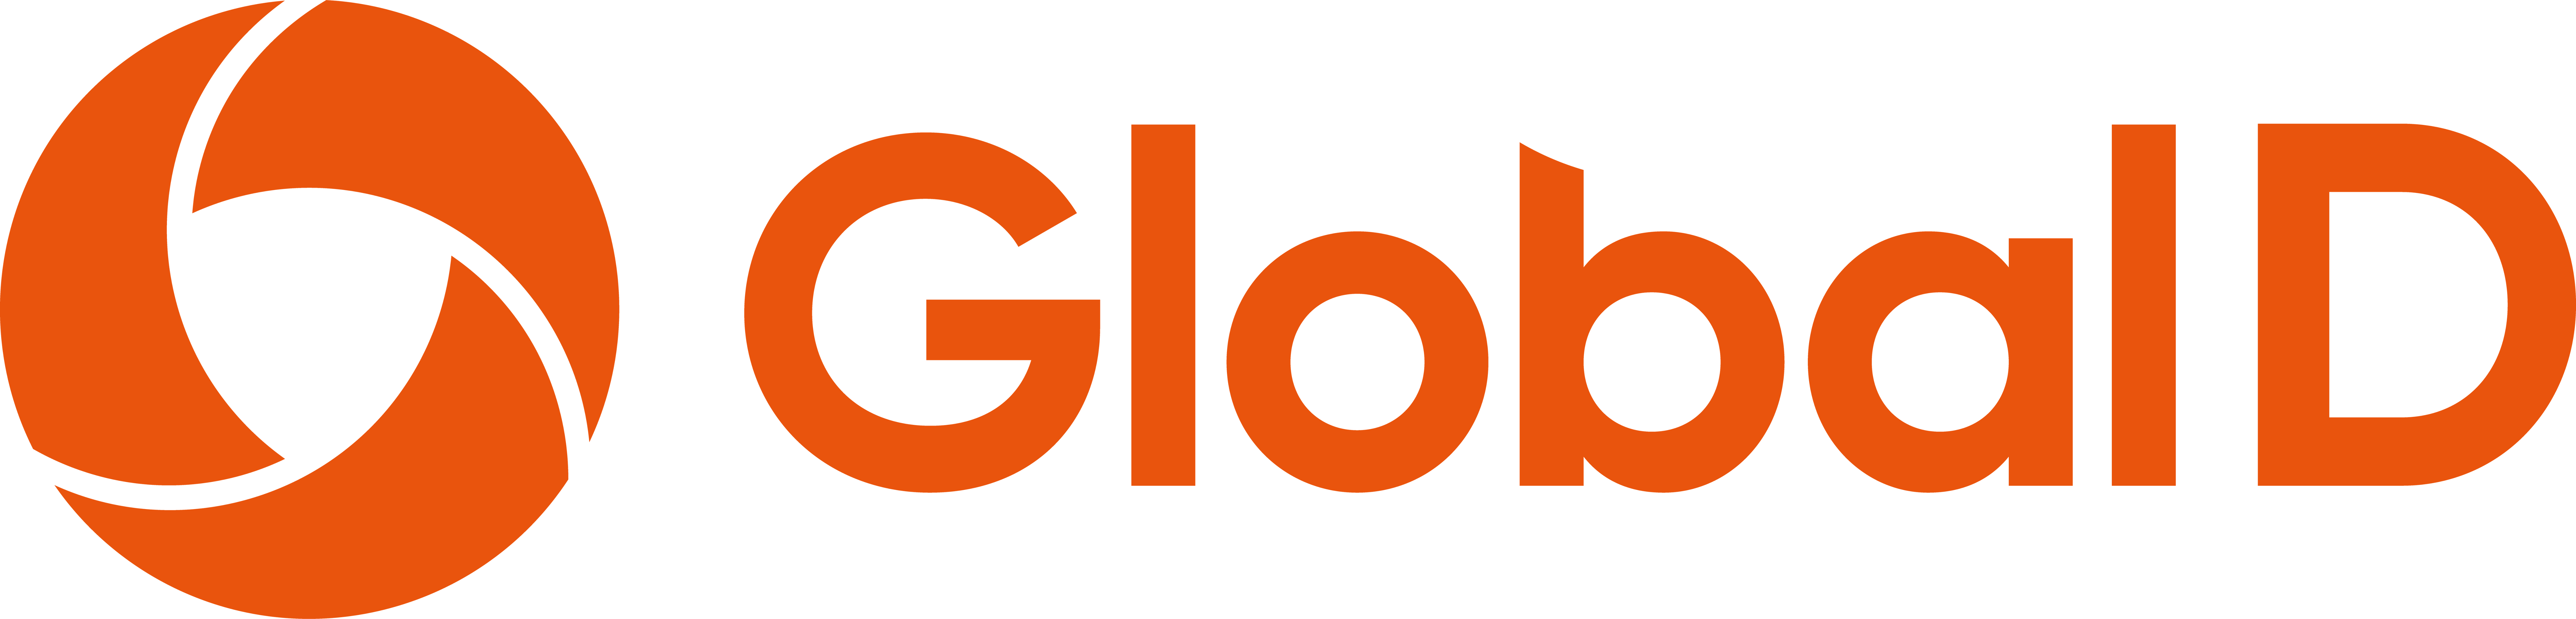 Global D